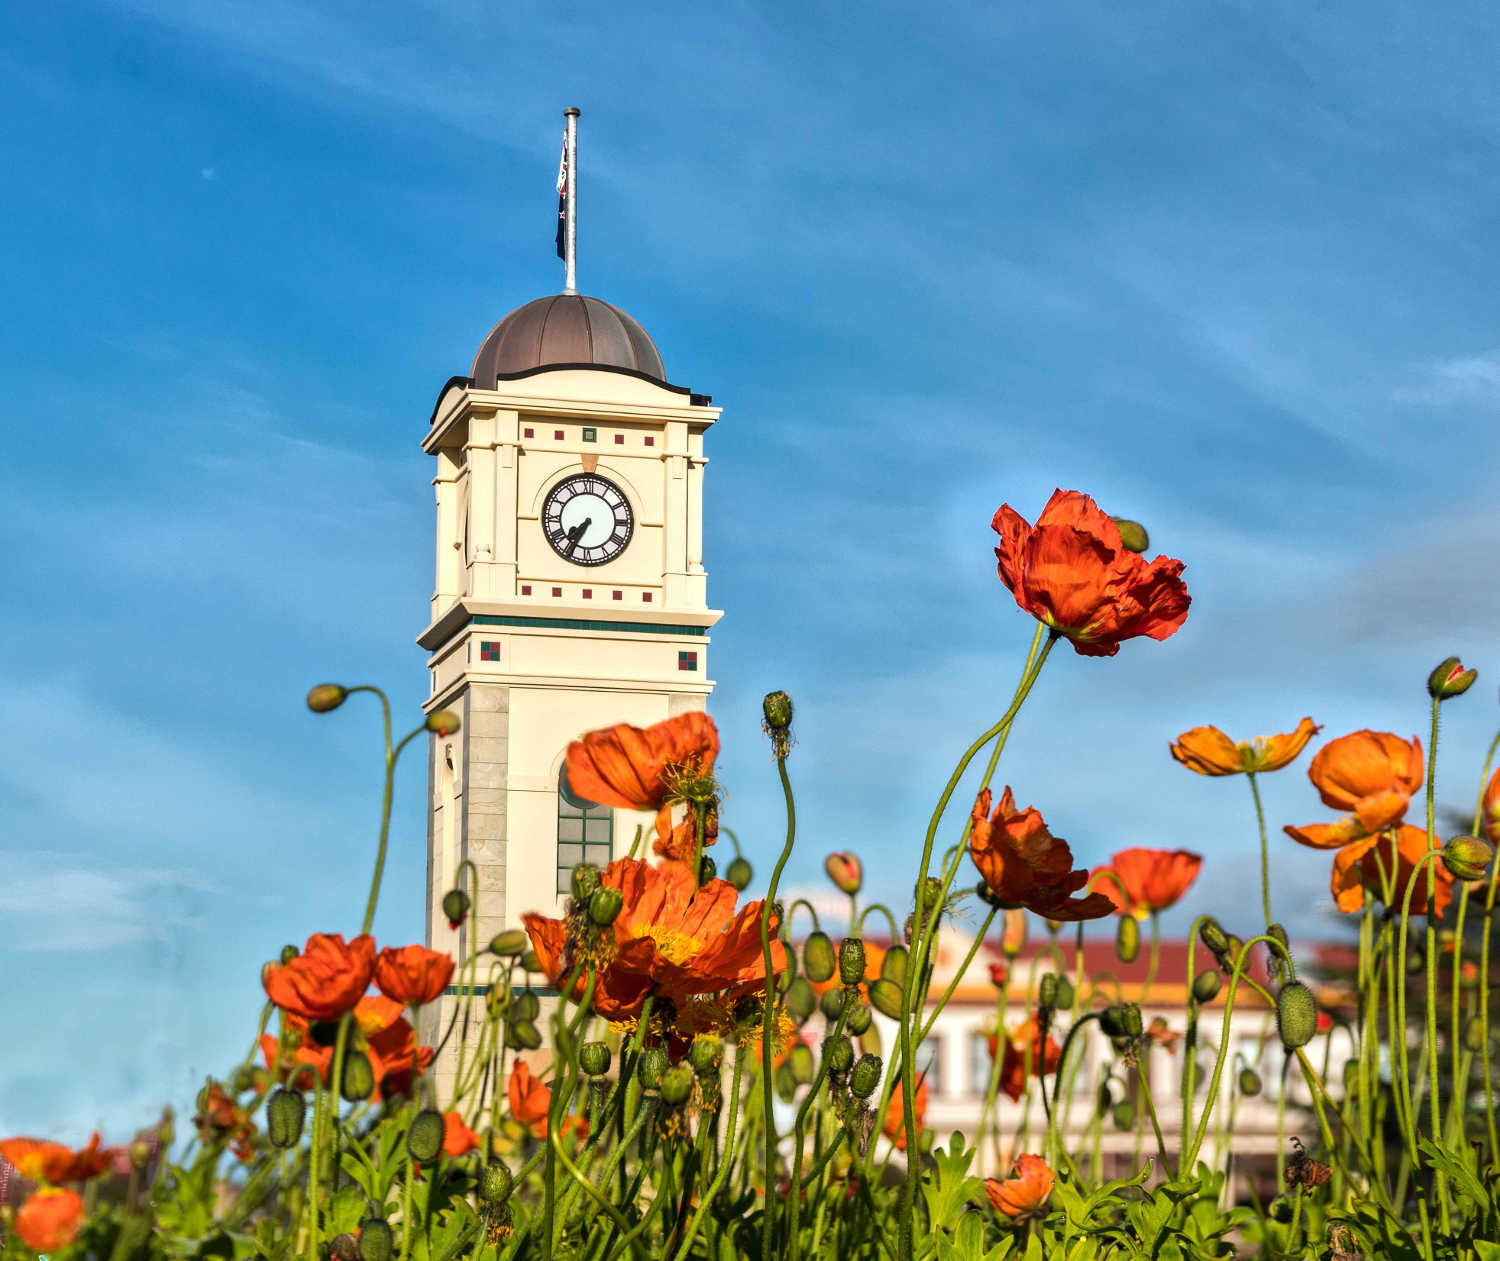 Feilding town clock, Wellington, New Zealand